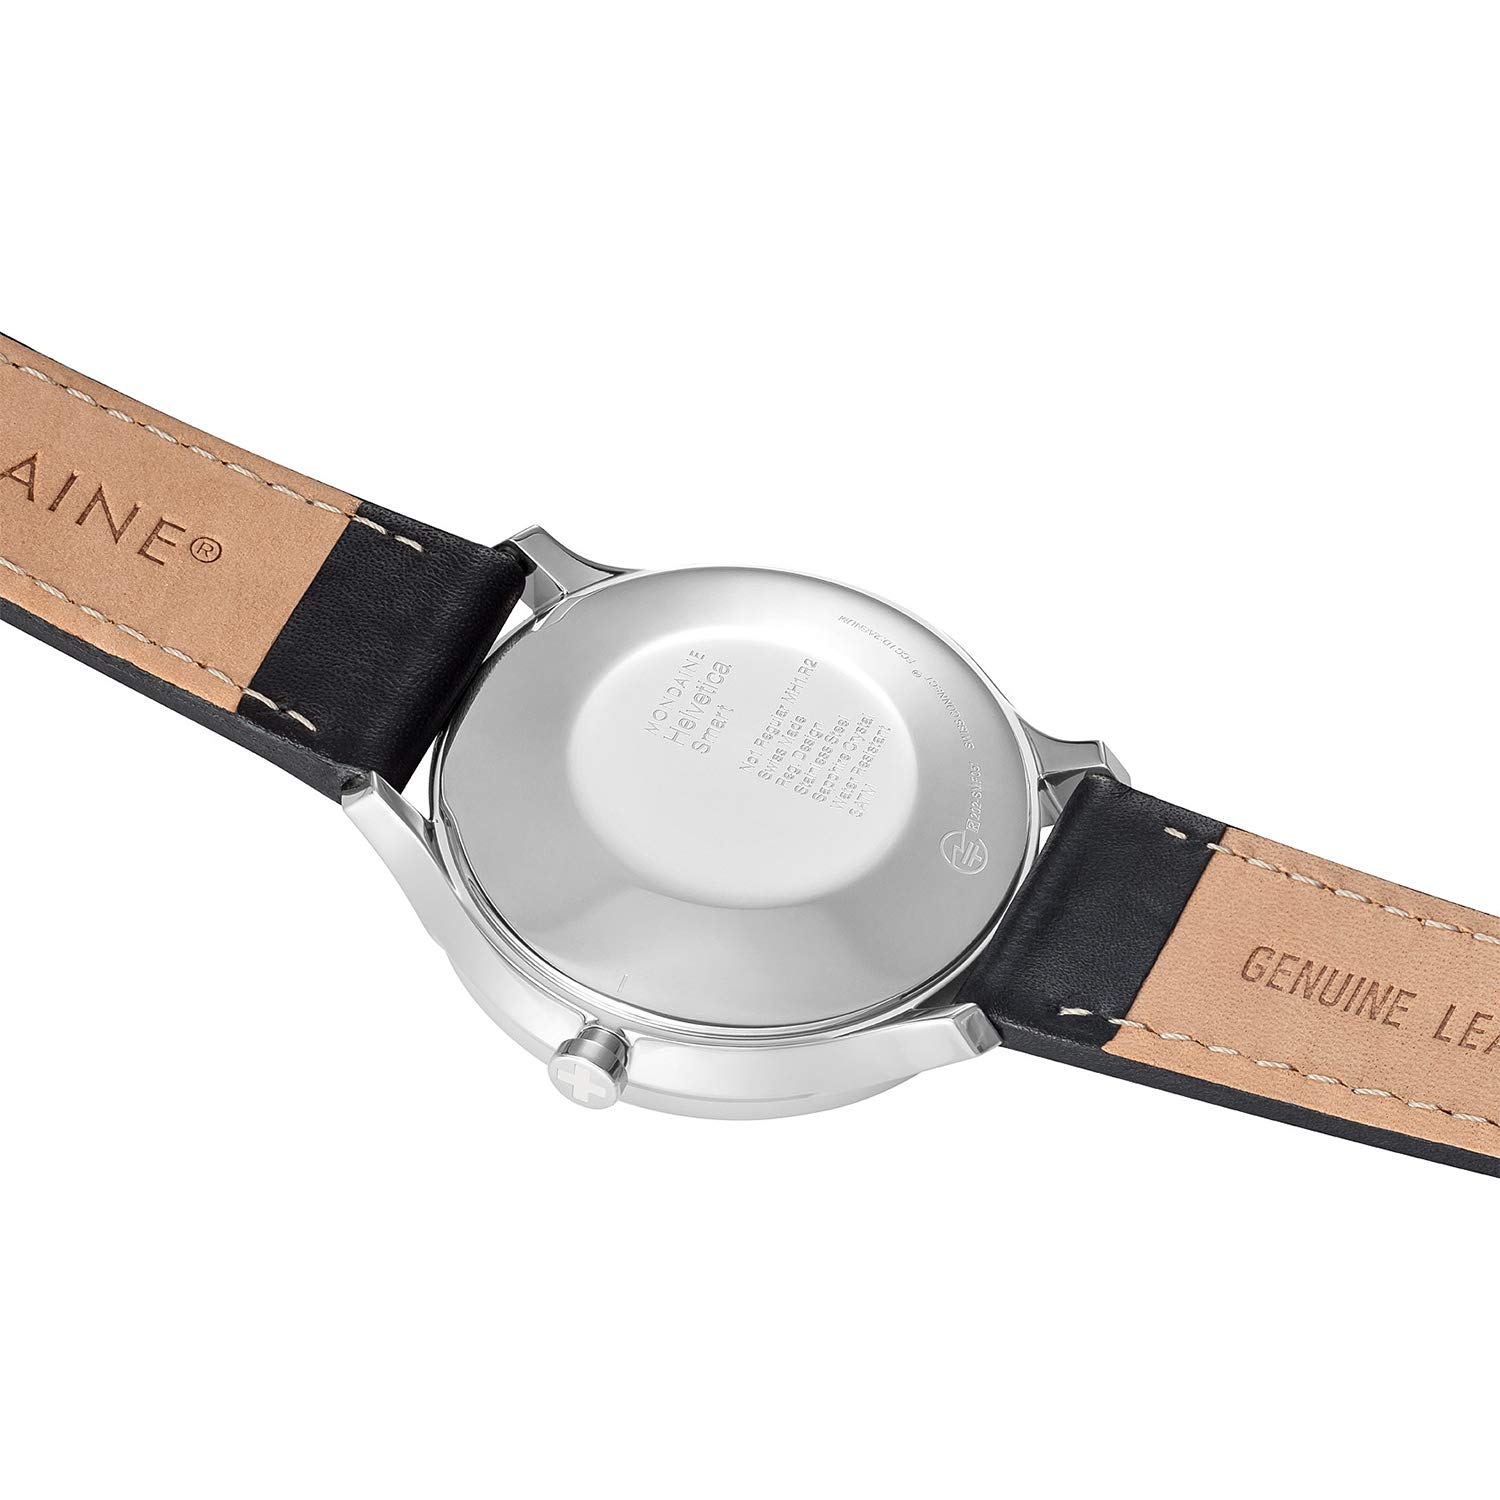 Mondaine Helvetica No 1 Classy Smartwatch for Men (MH1.R2S20.LB): Pedometer Caloric Tracking Sleep Tracker